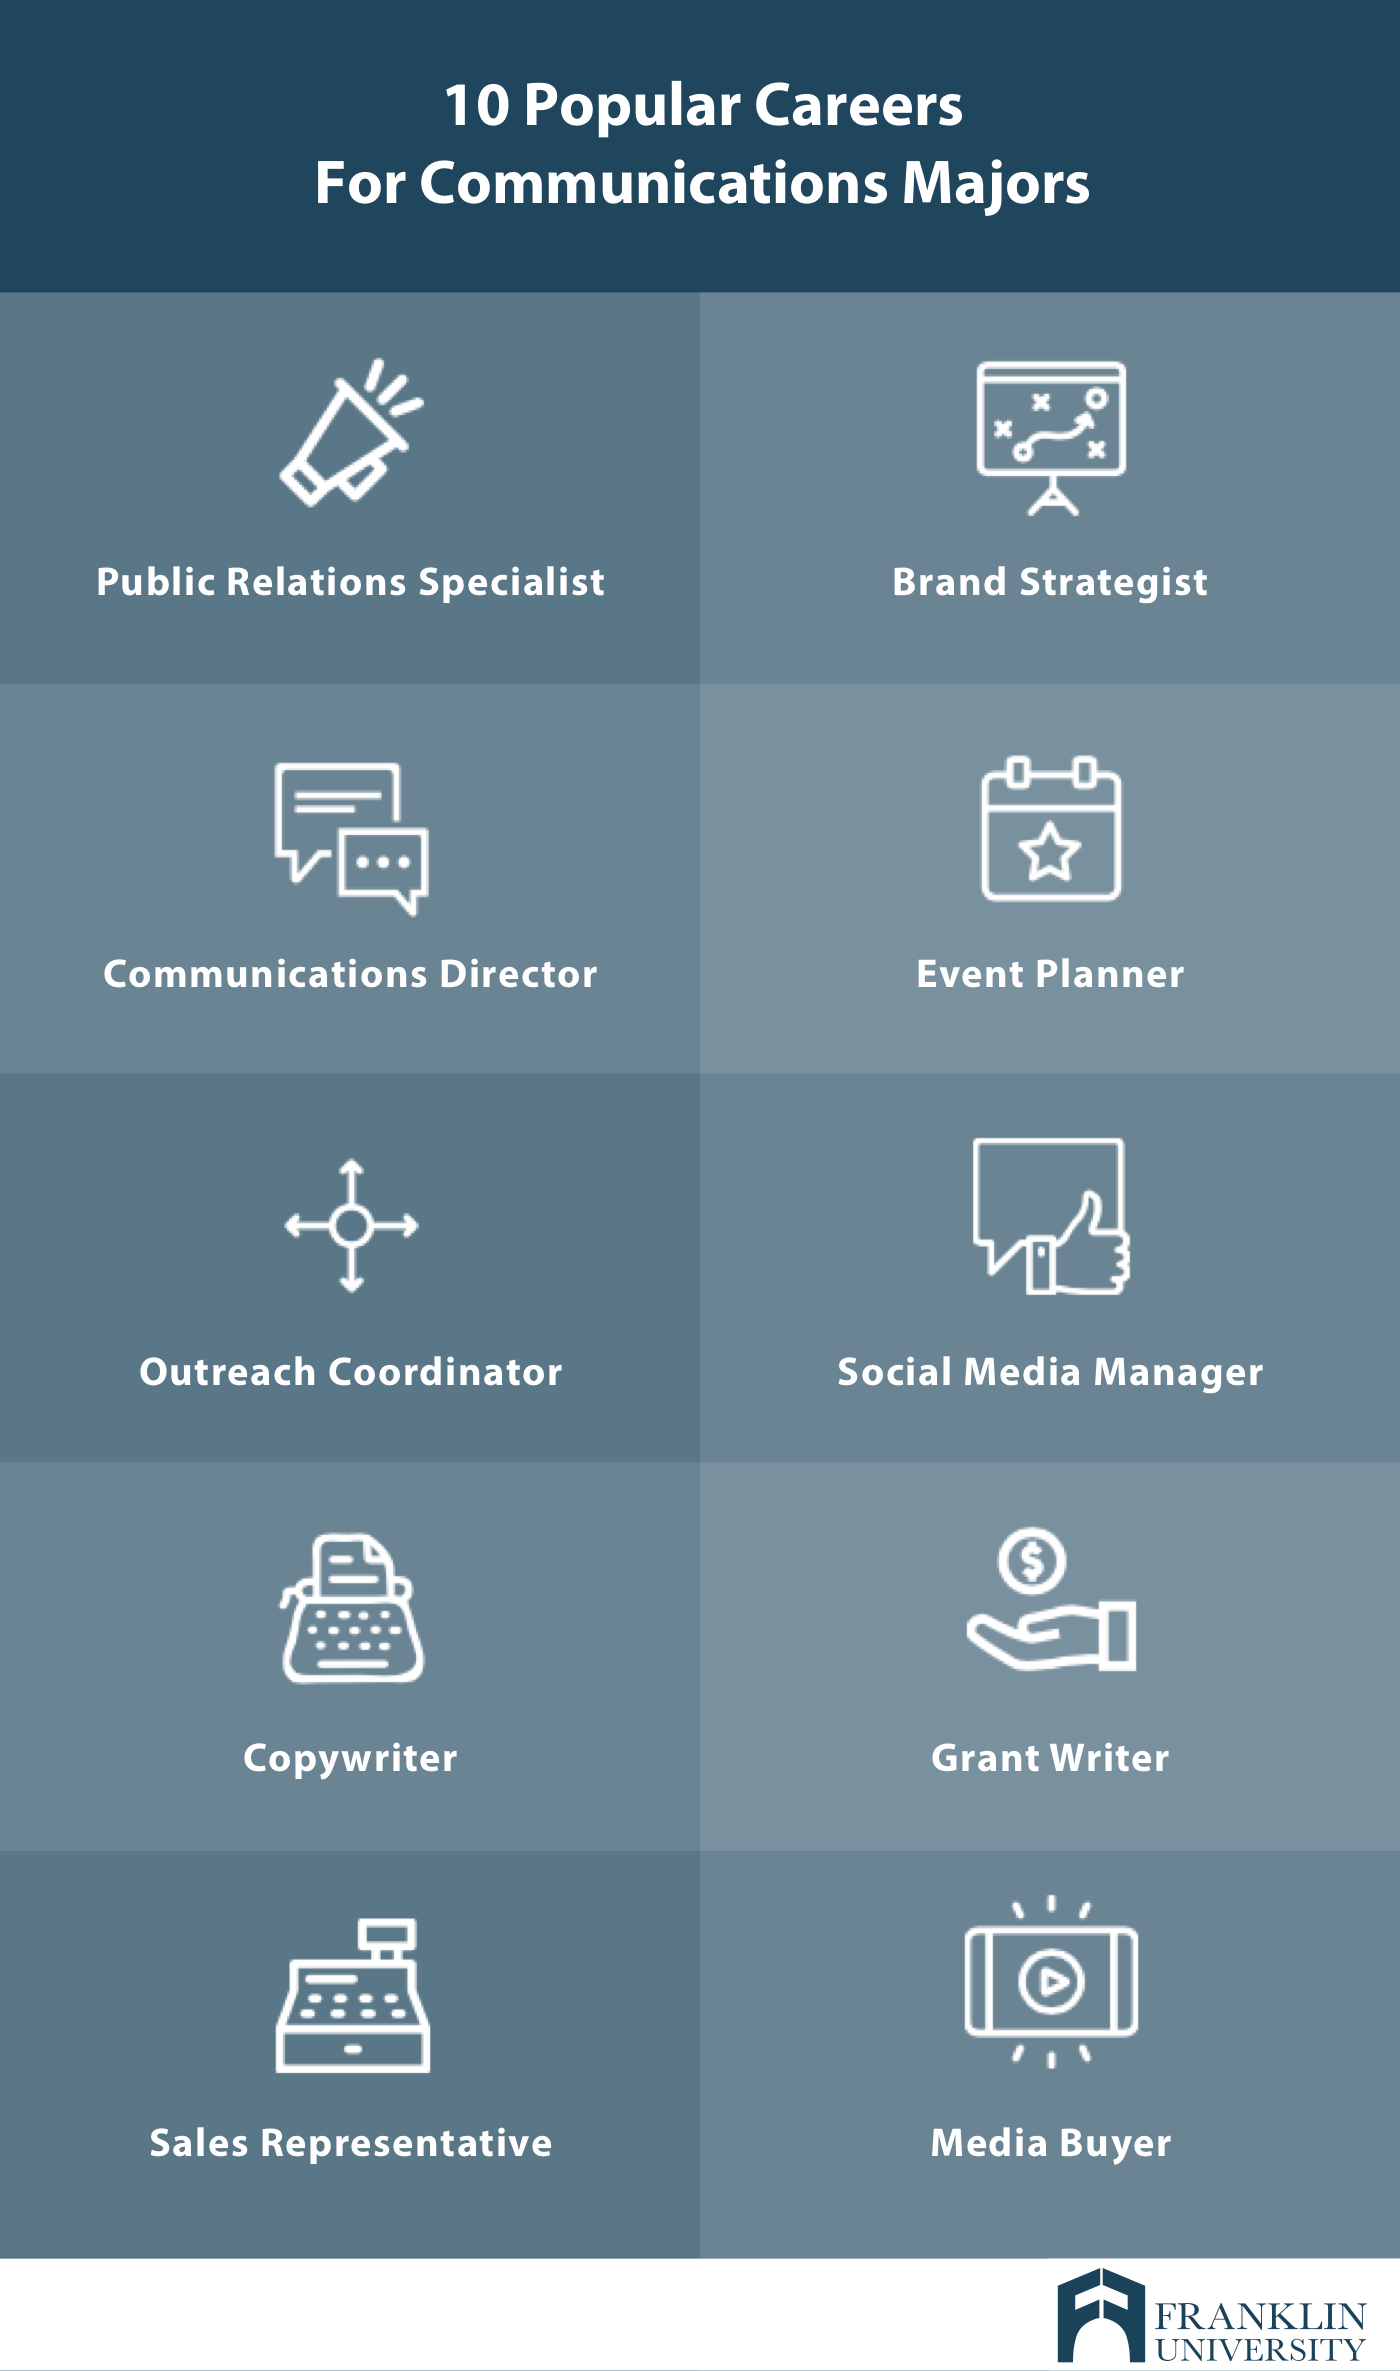 graphic describing 10 popular careers for communications majors